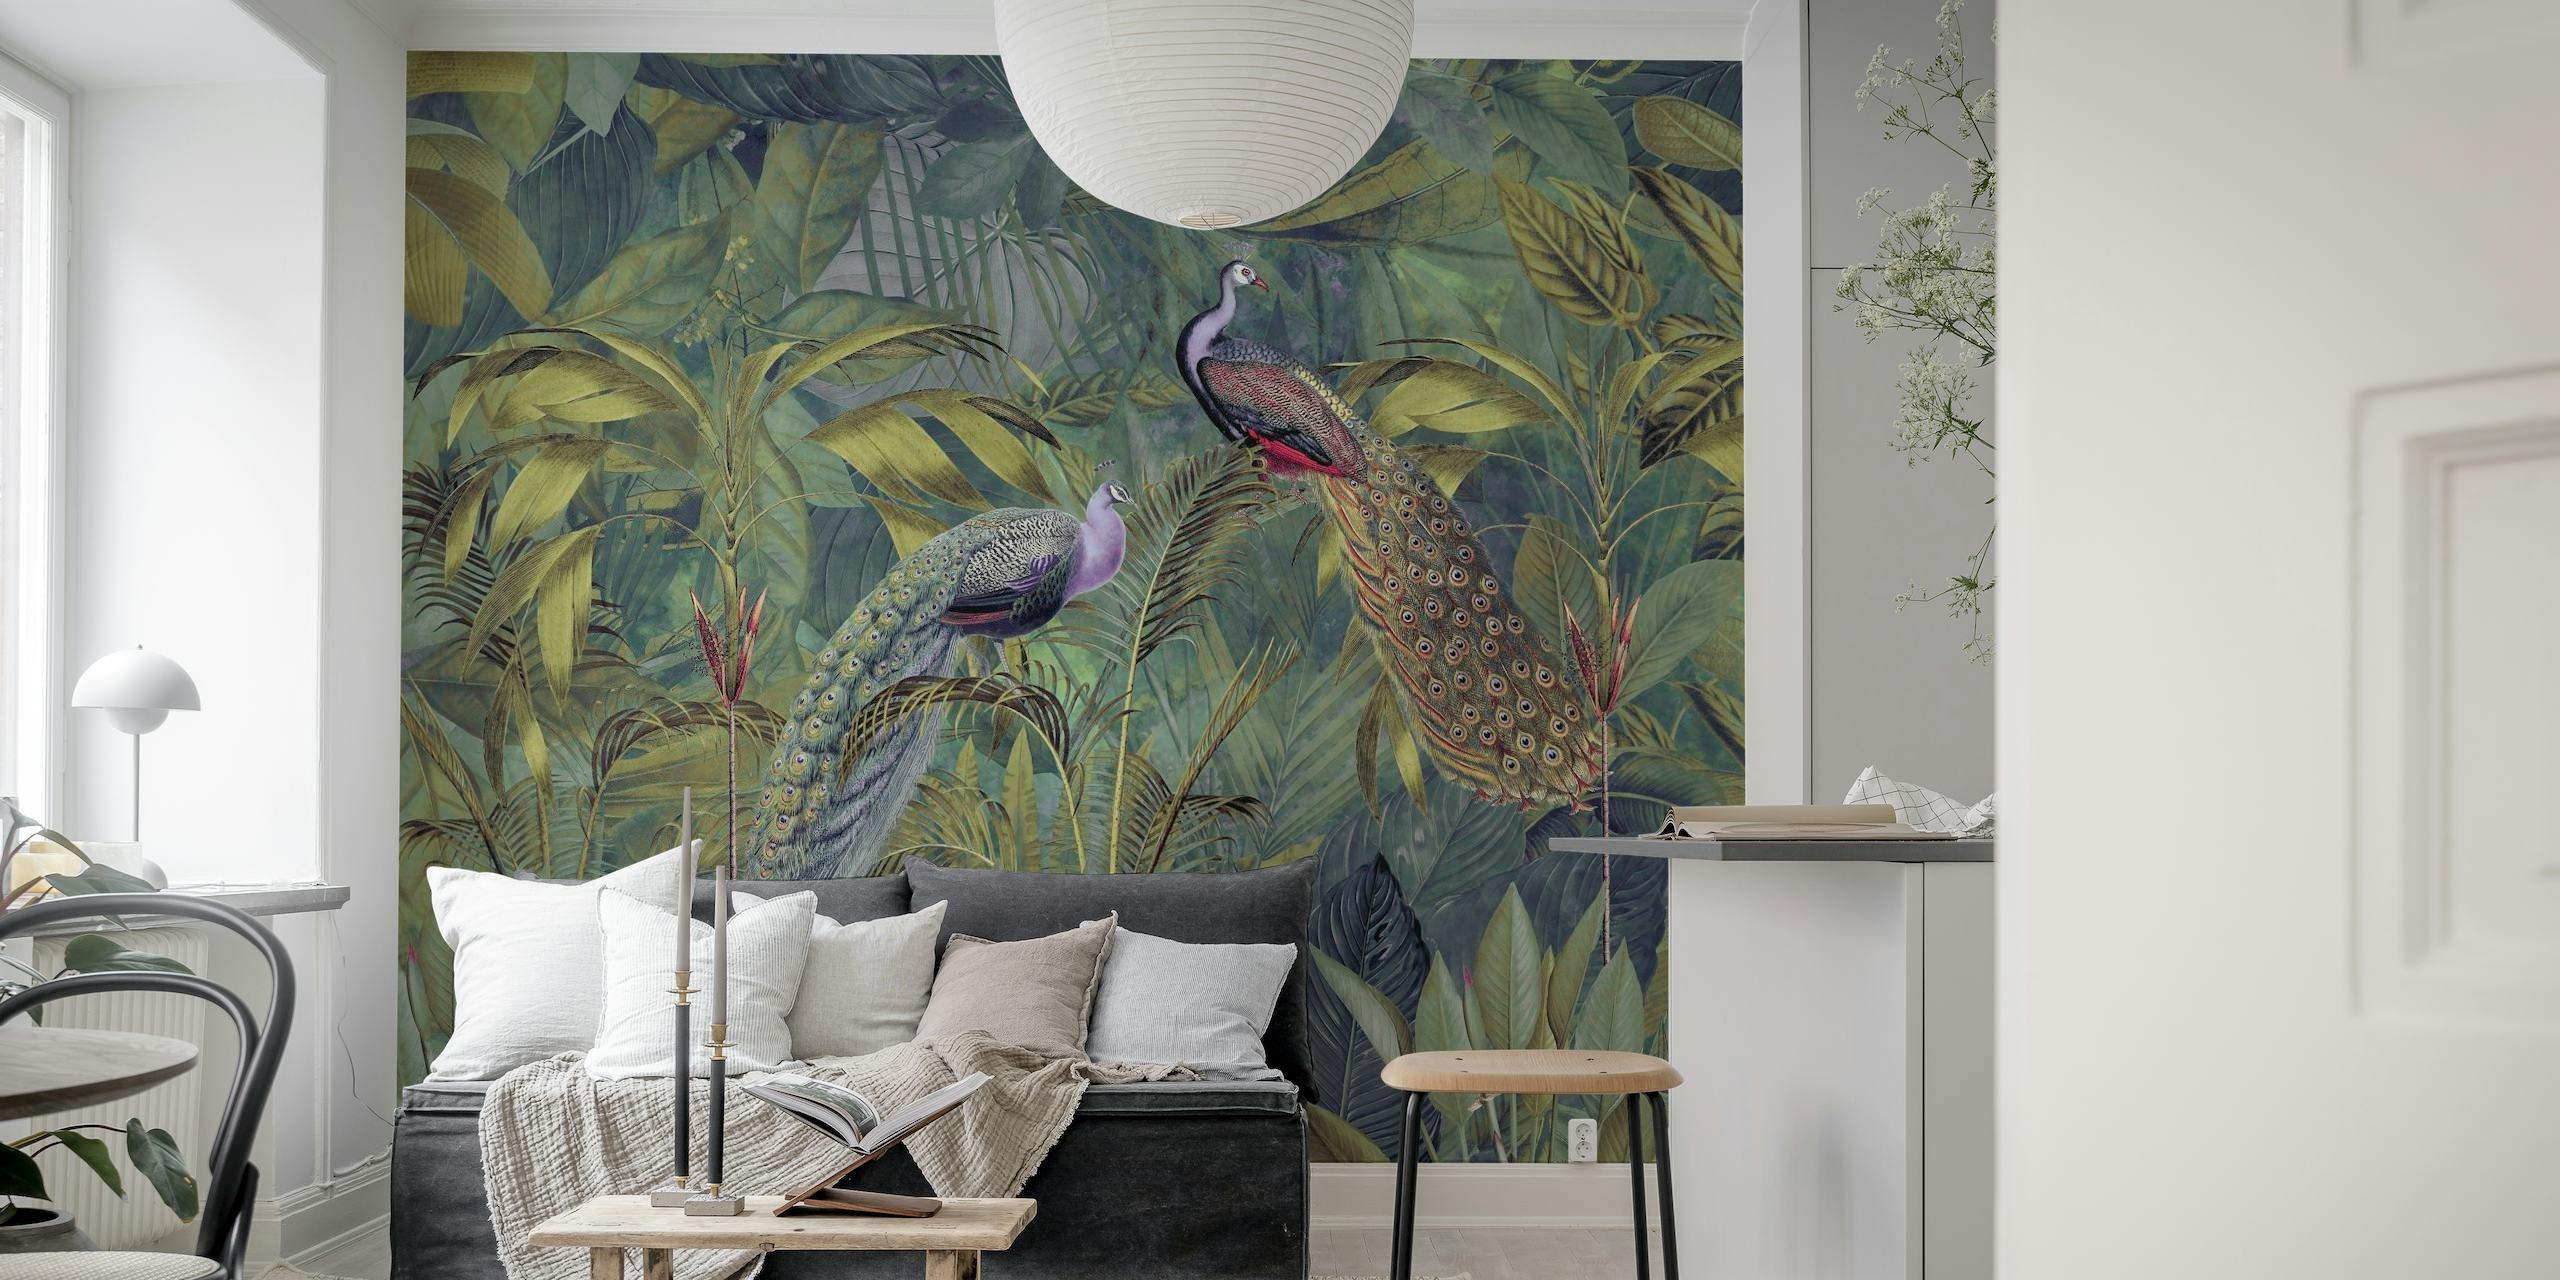 Elegant peacocks amidst tropical foliage in a wall mural